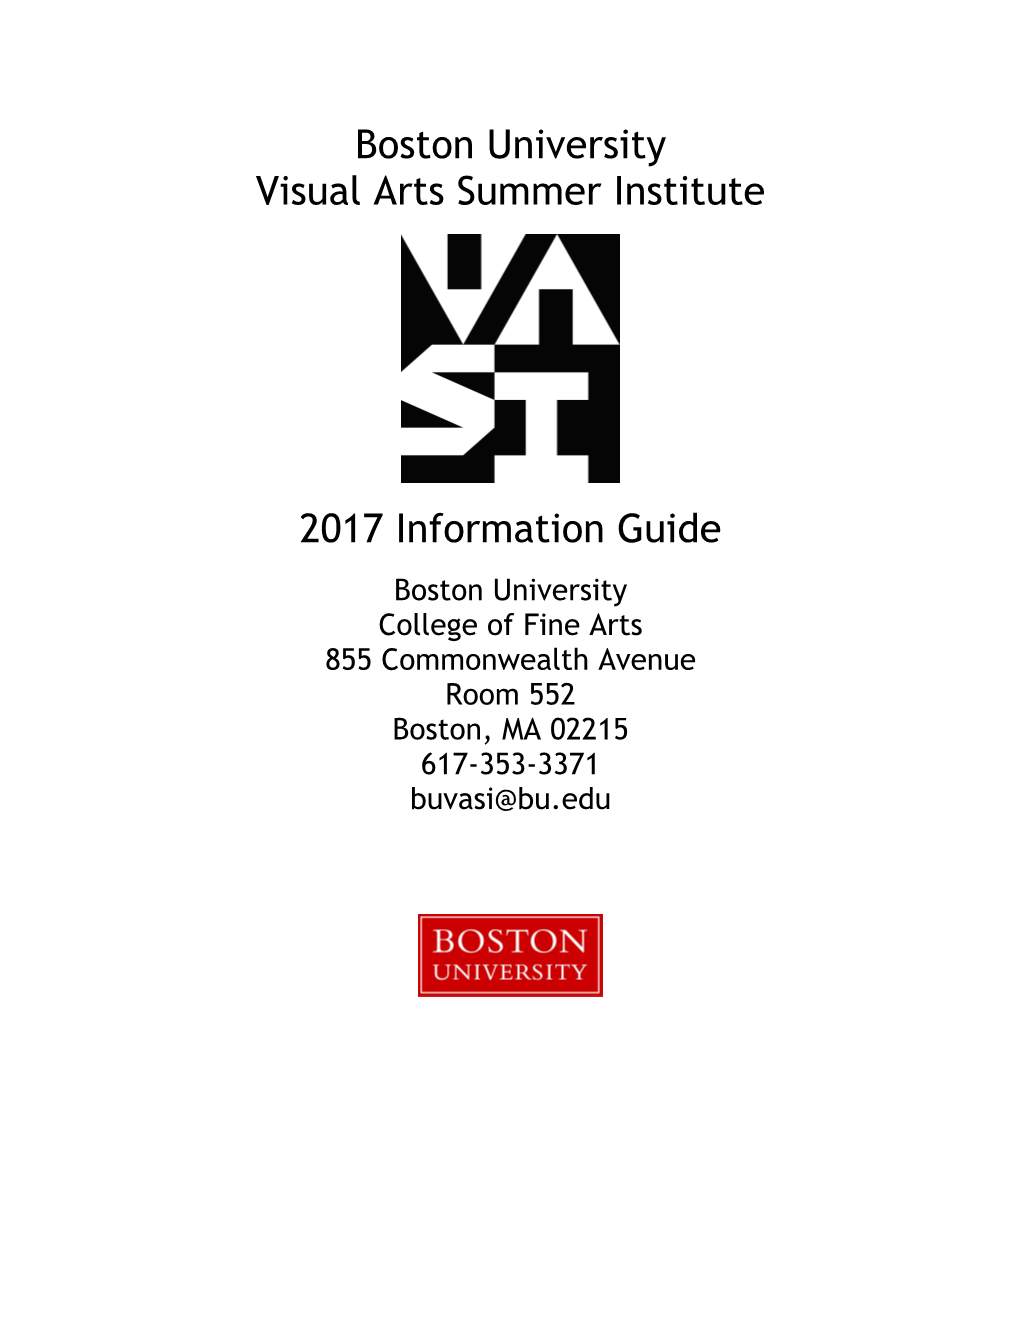 Boston University Visual Arts Summer Institute 2017 Information Guide